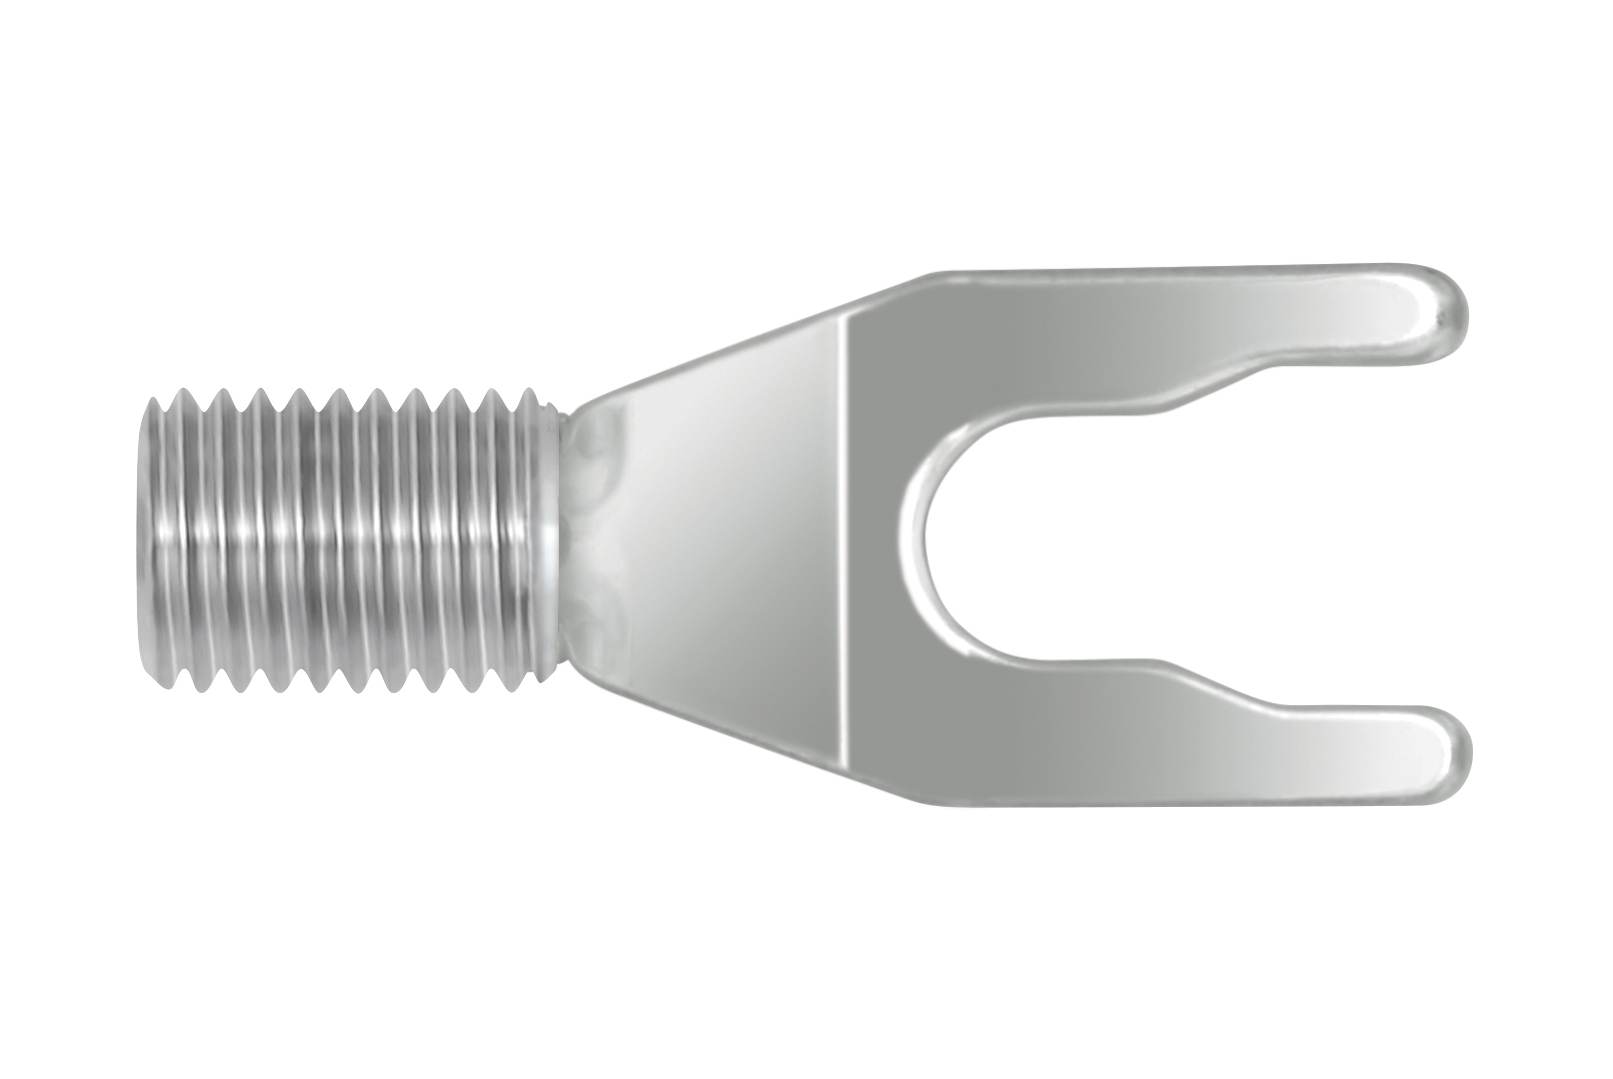 Разъёмы для акустического кабеля Wire World 16 silver spade for exchanging (SPDSEX16), 16 шт. разъёмы для акустического кабеля wire world gold set screw banana 10ga abs shell 4p